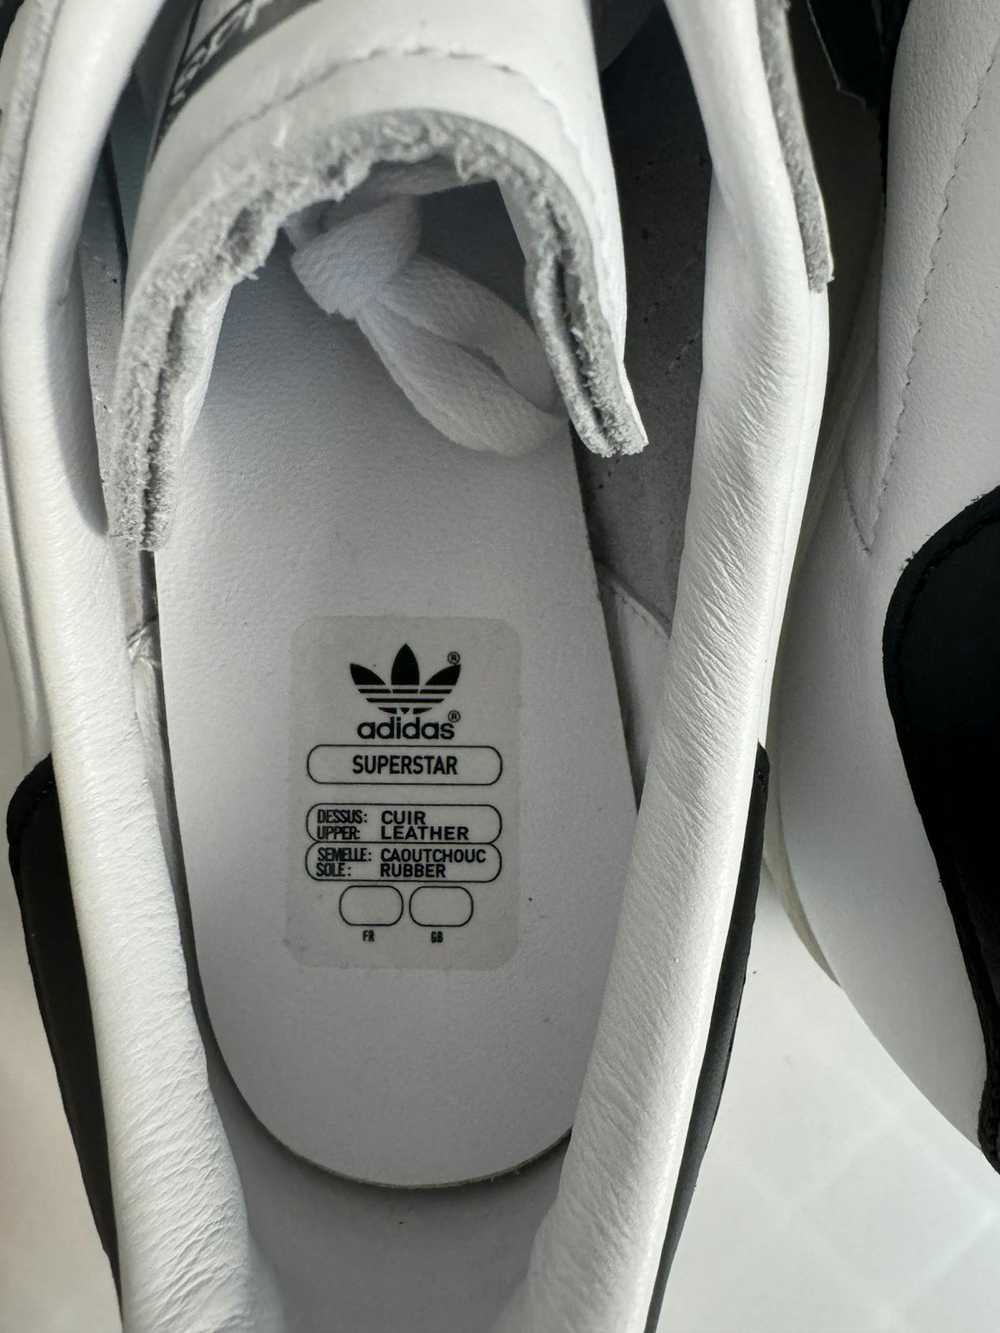 Adidas Adidas SUPERSTAR shoes - image 3